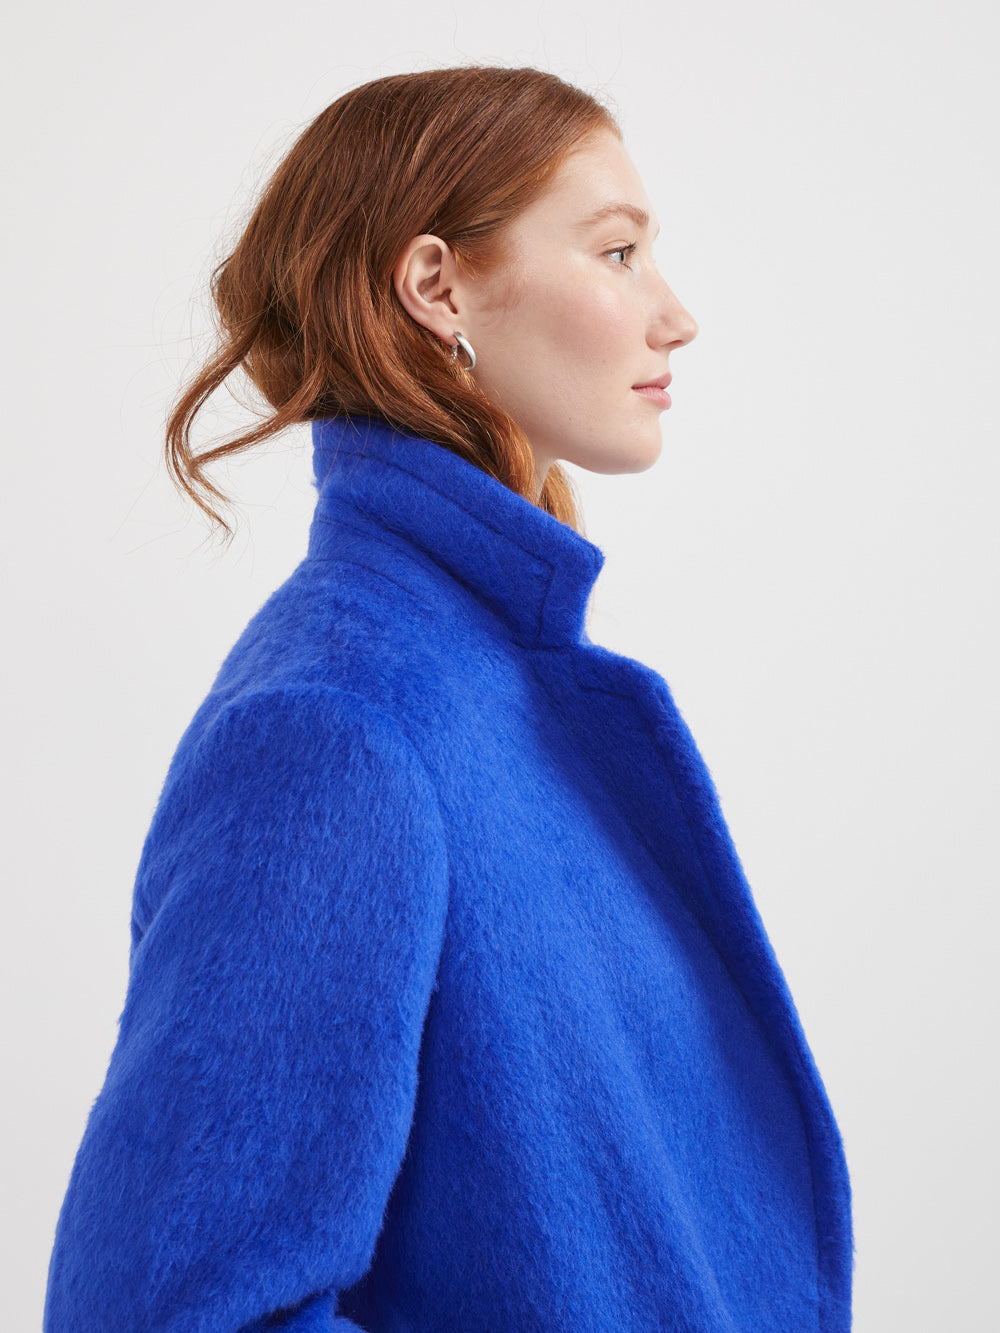 The Wool Blend Winter Coat